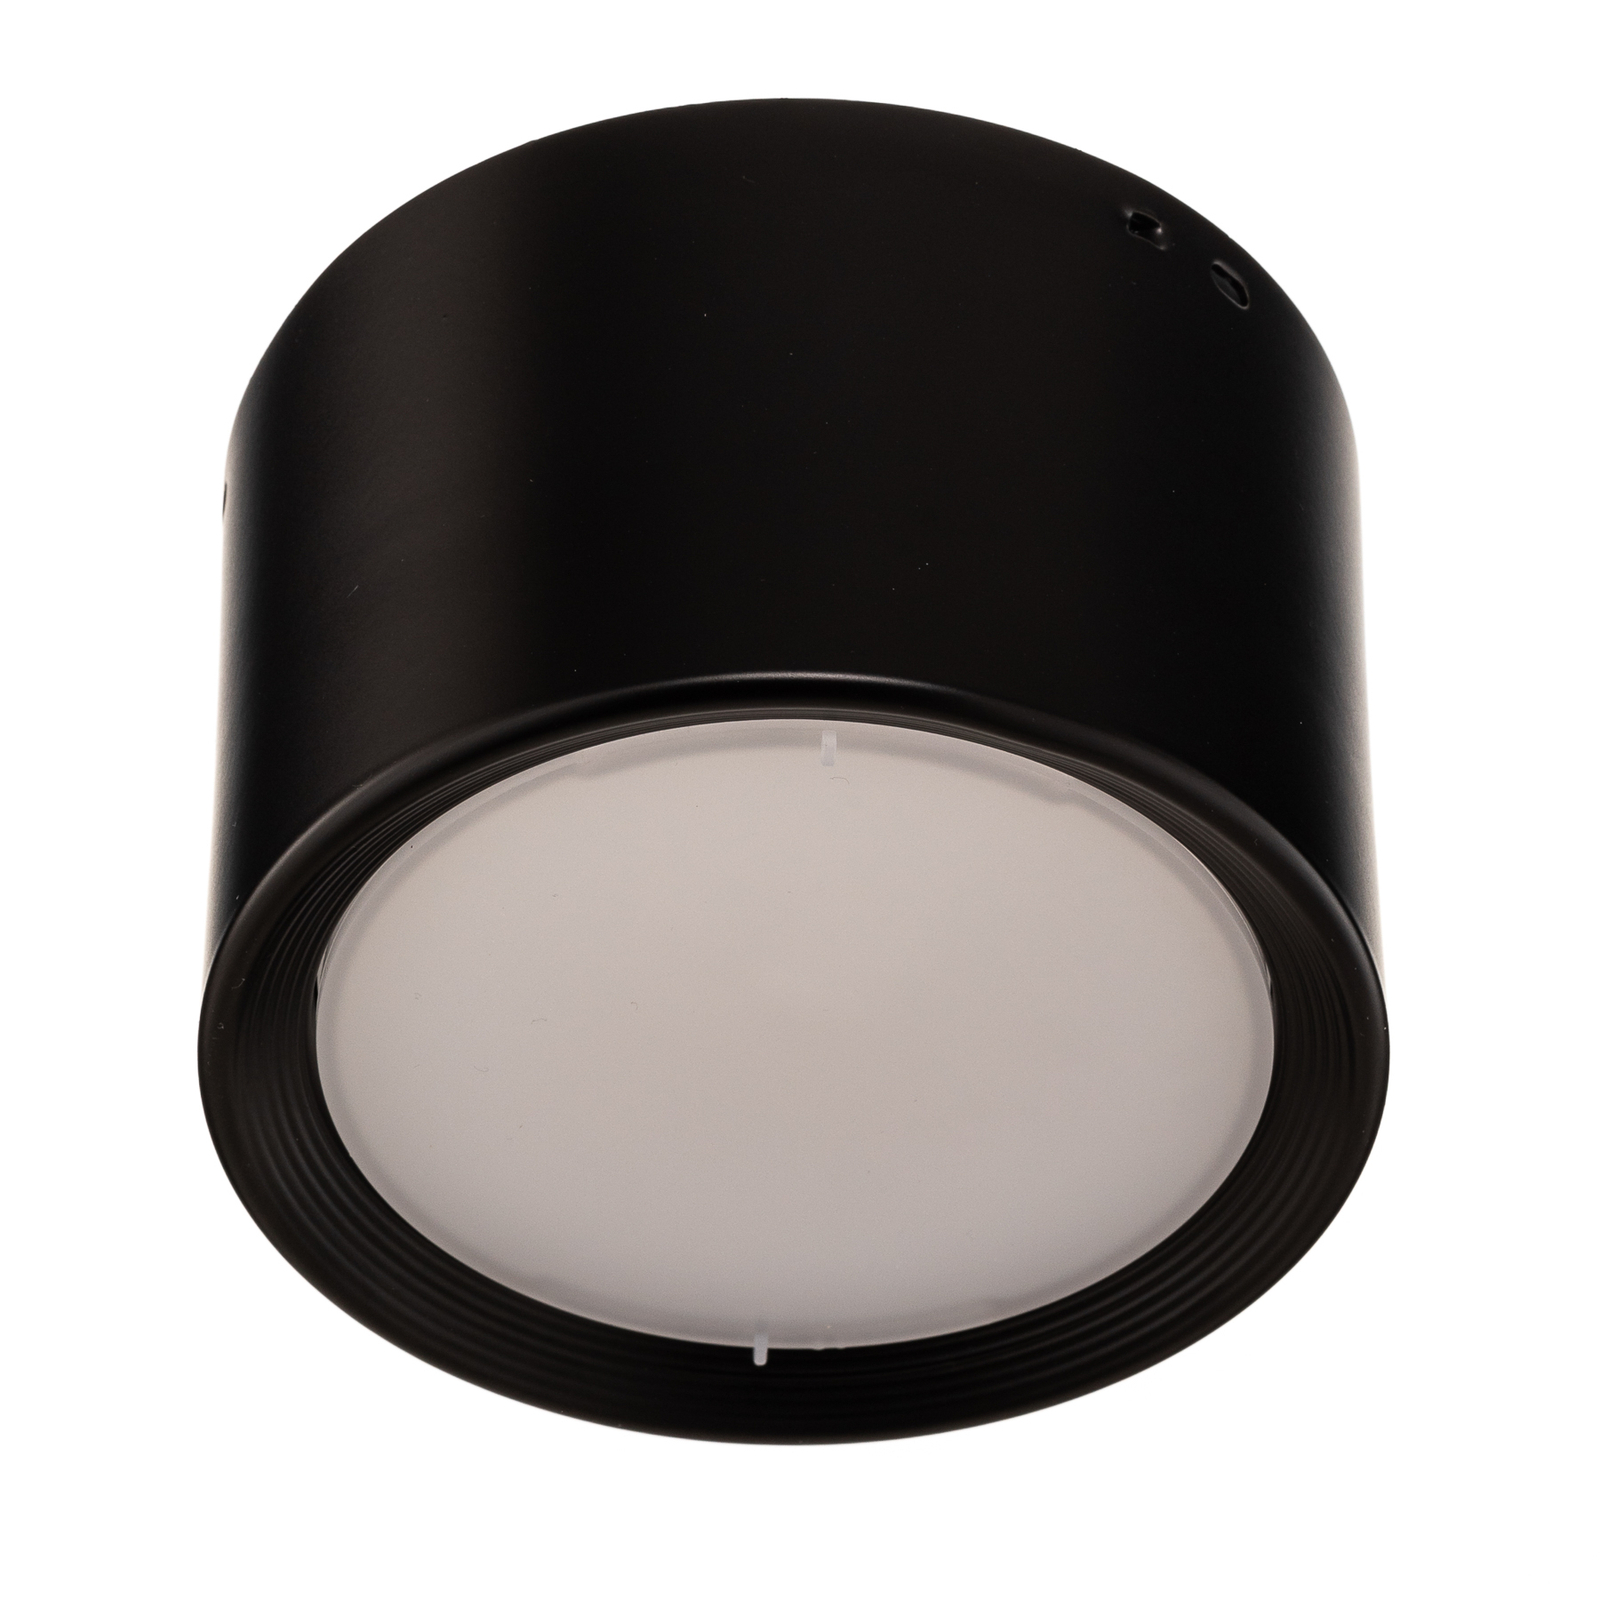 LED downlight Ita en noir avec diffuseur, Ø 10 cm